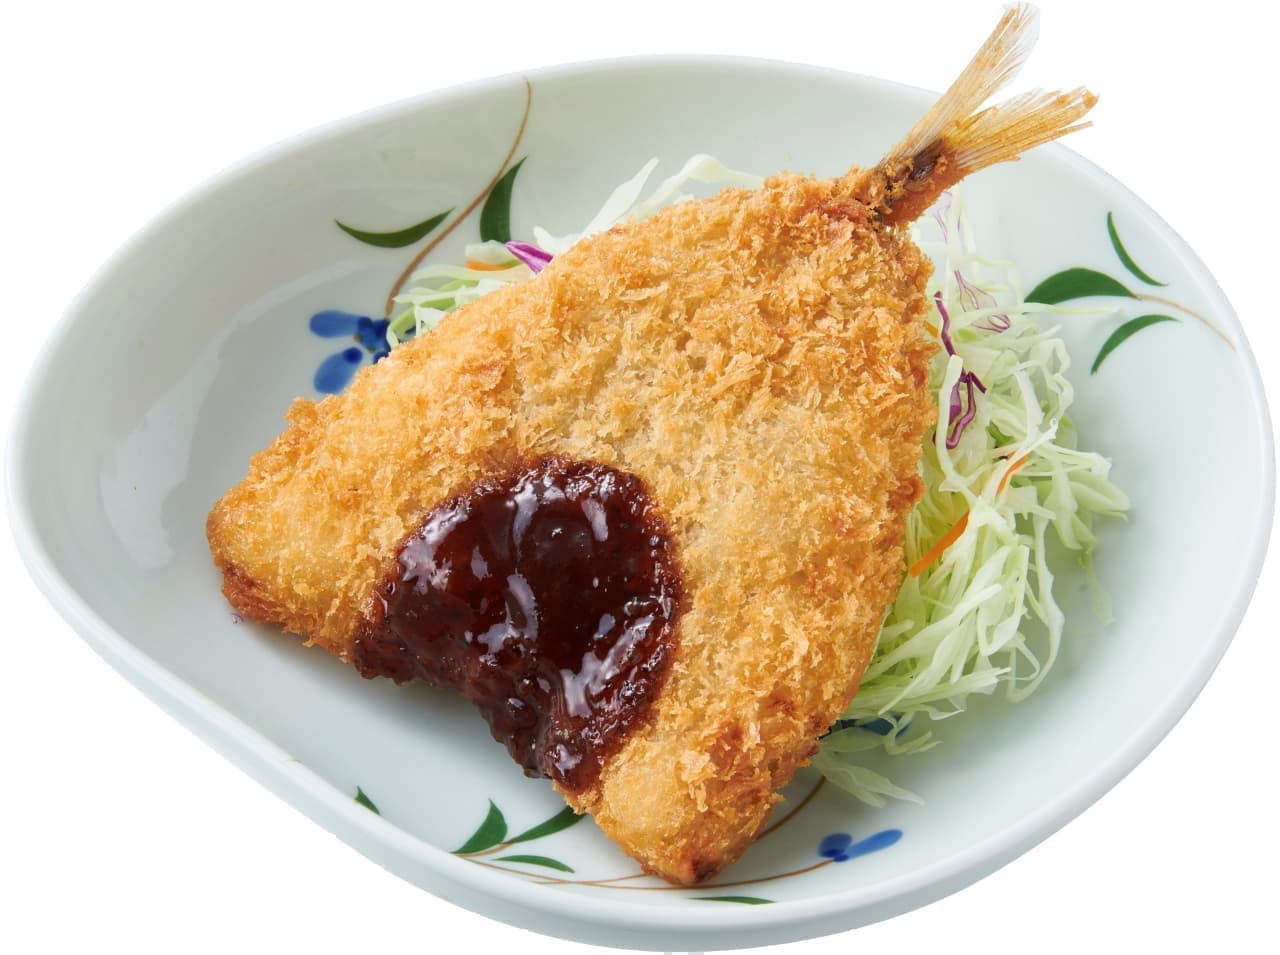 Yayoiken "Single item fried horse mackerel